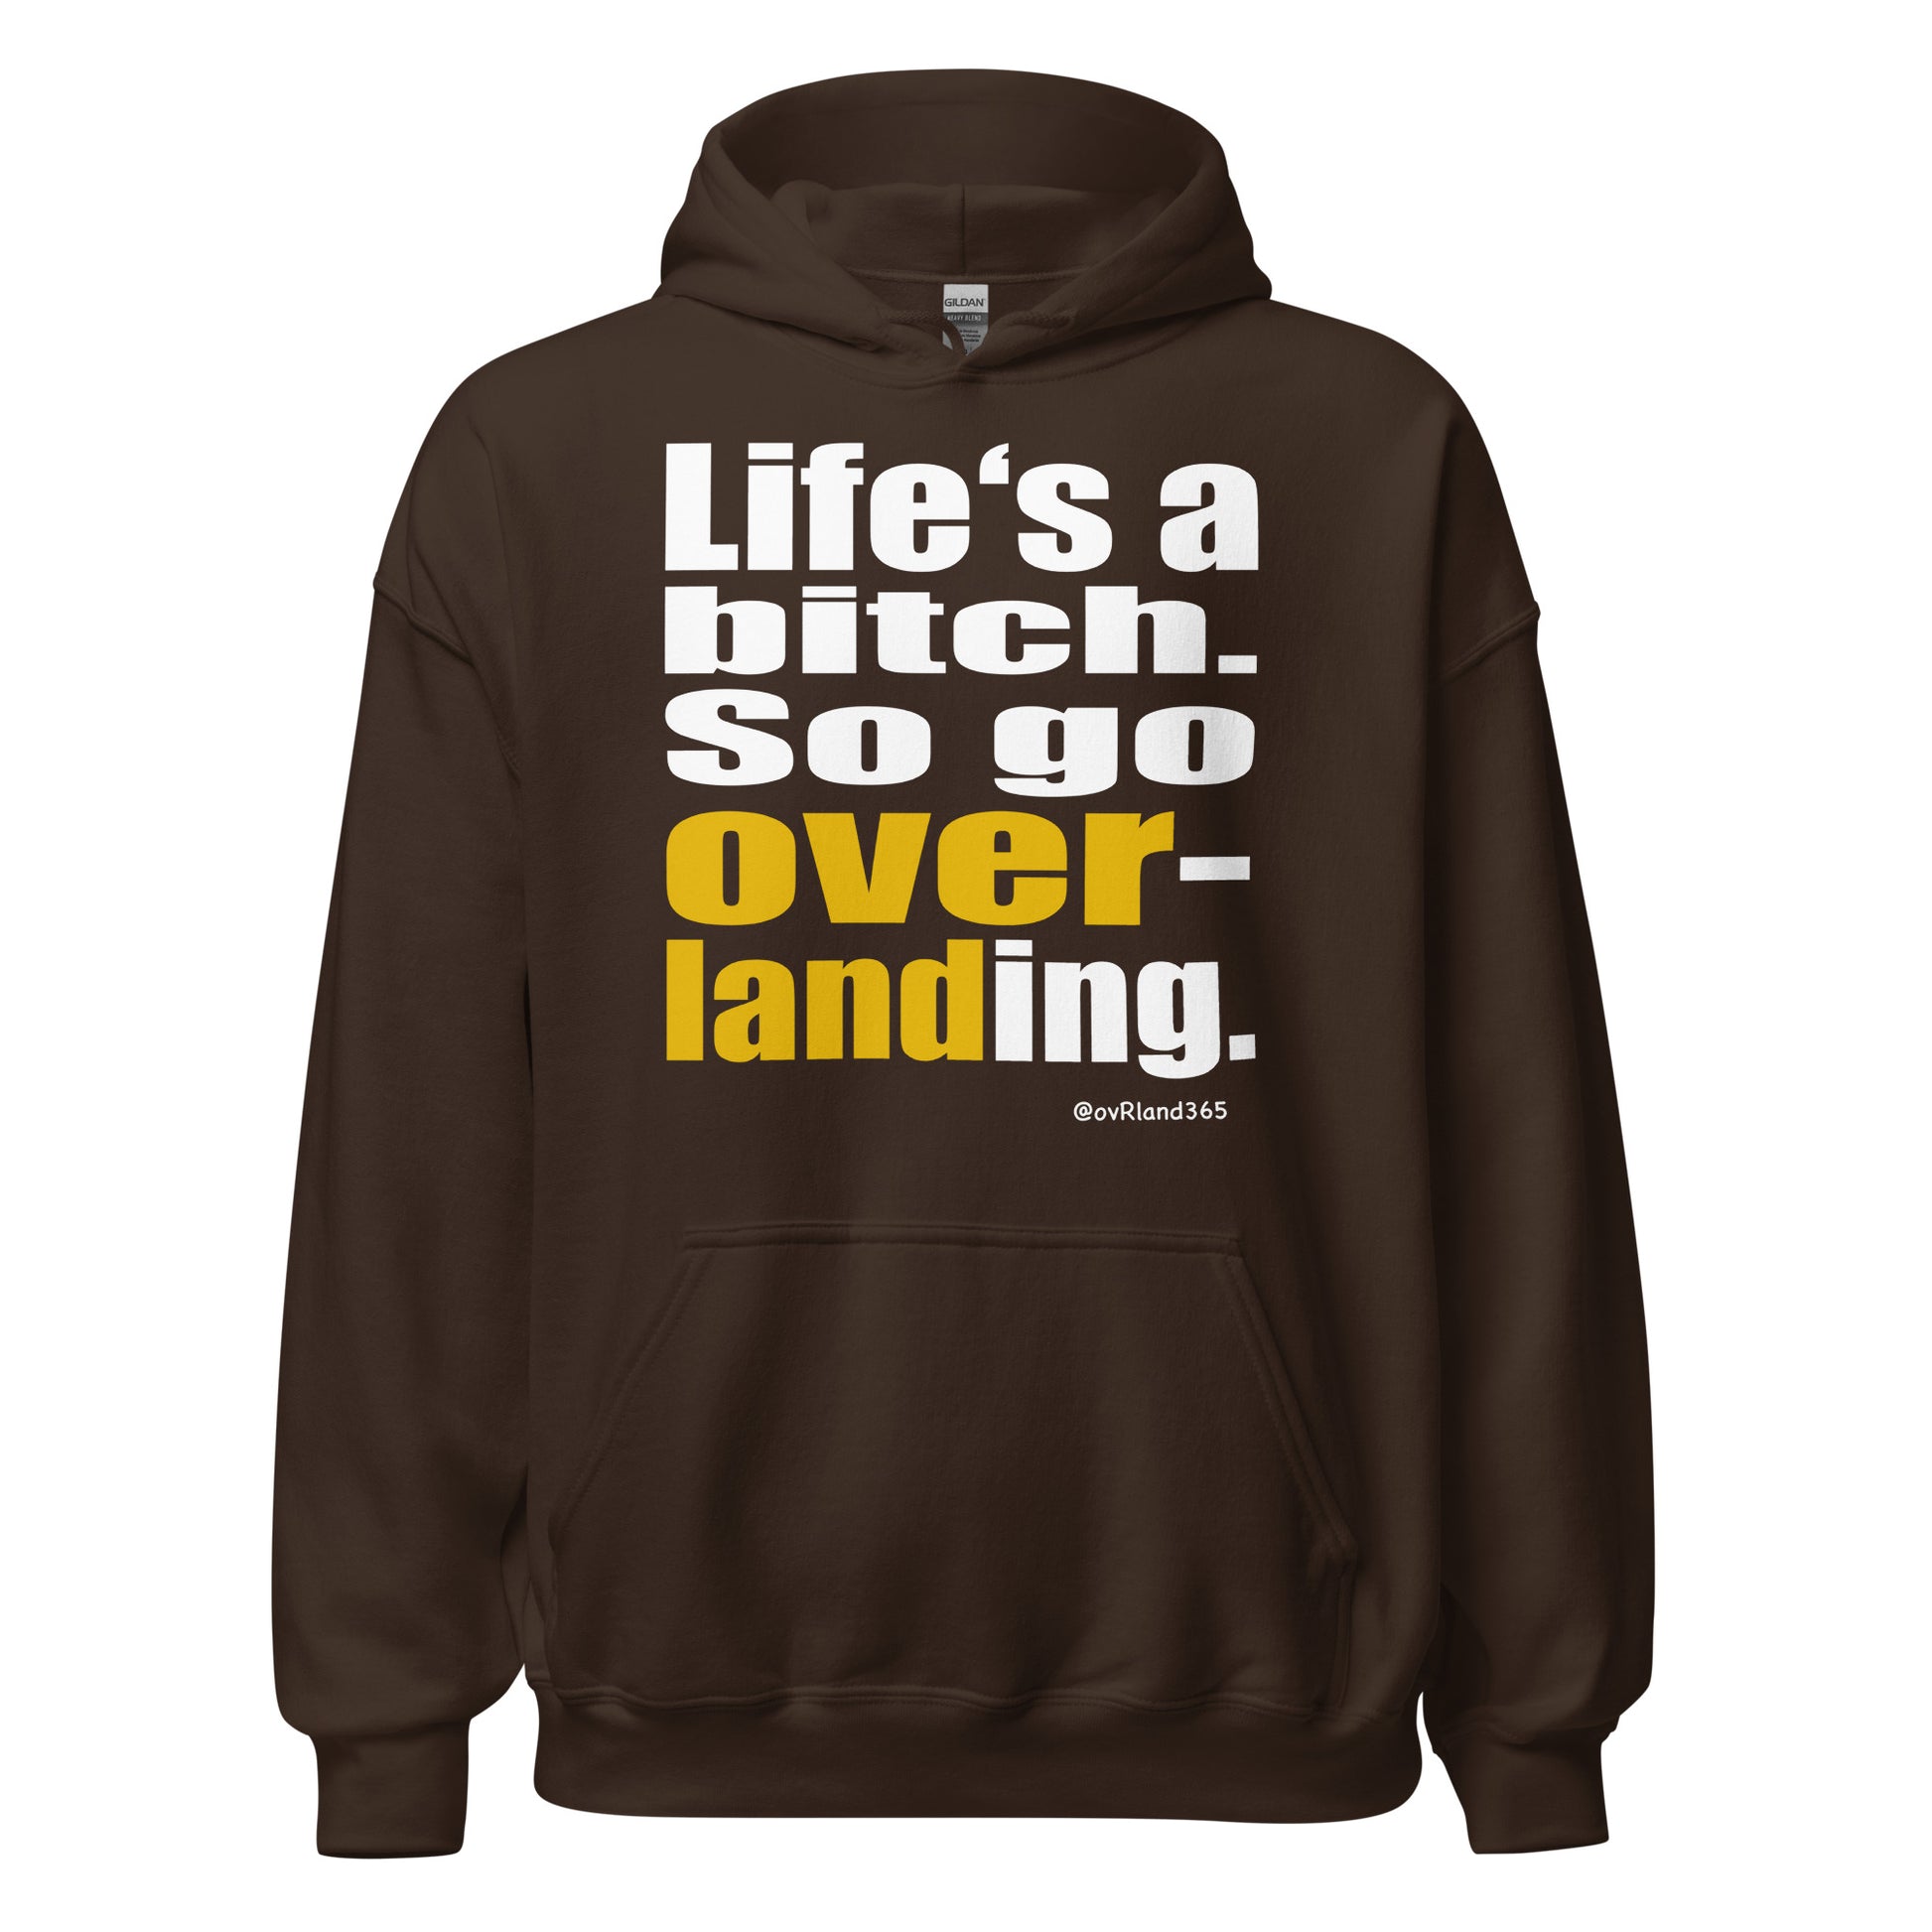 "Life's a bitch. So go overlanding." Dark chocolate hoodie. overland365.com